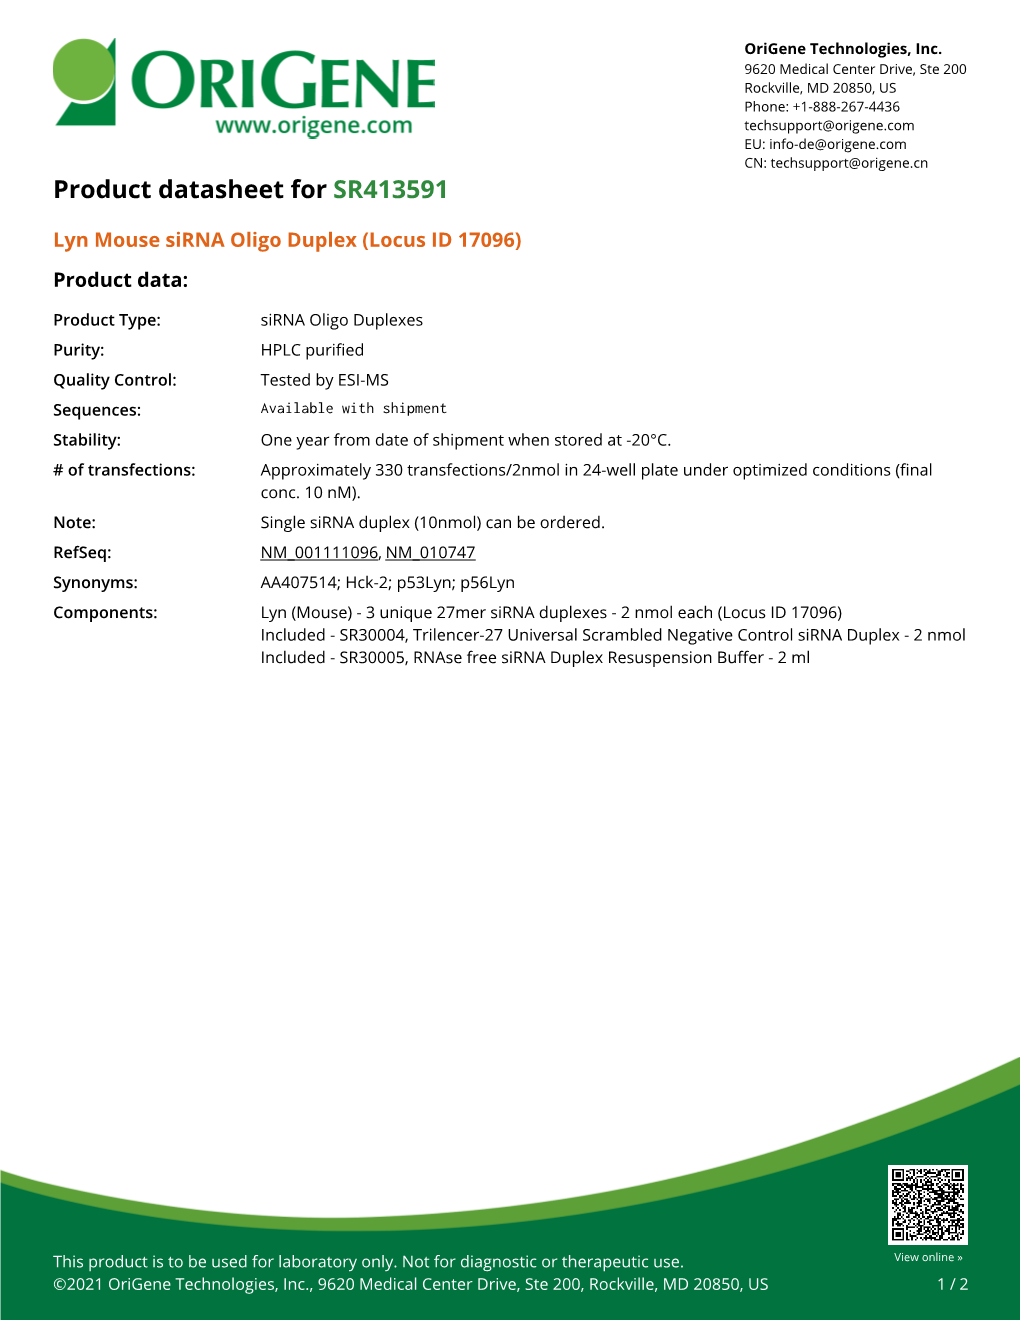 Lyn Mouse Sirna Oligo Duplex (Locus ID 17096) Product Data